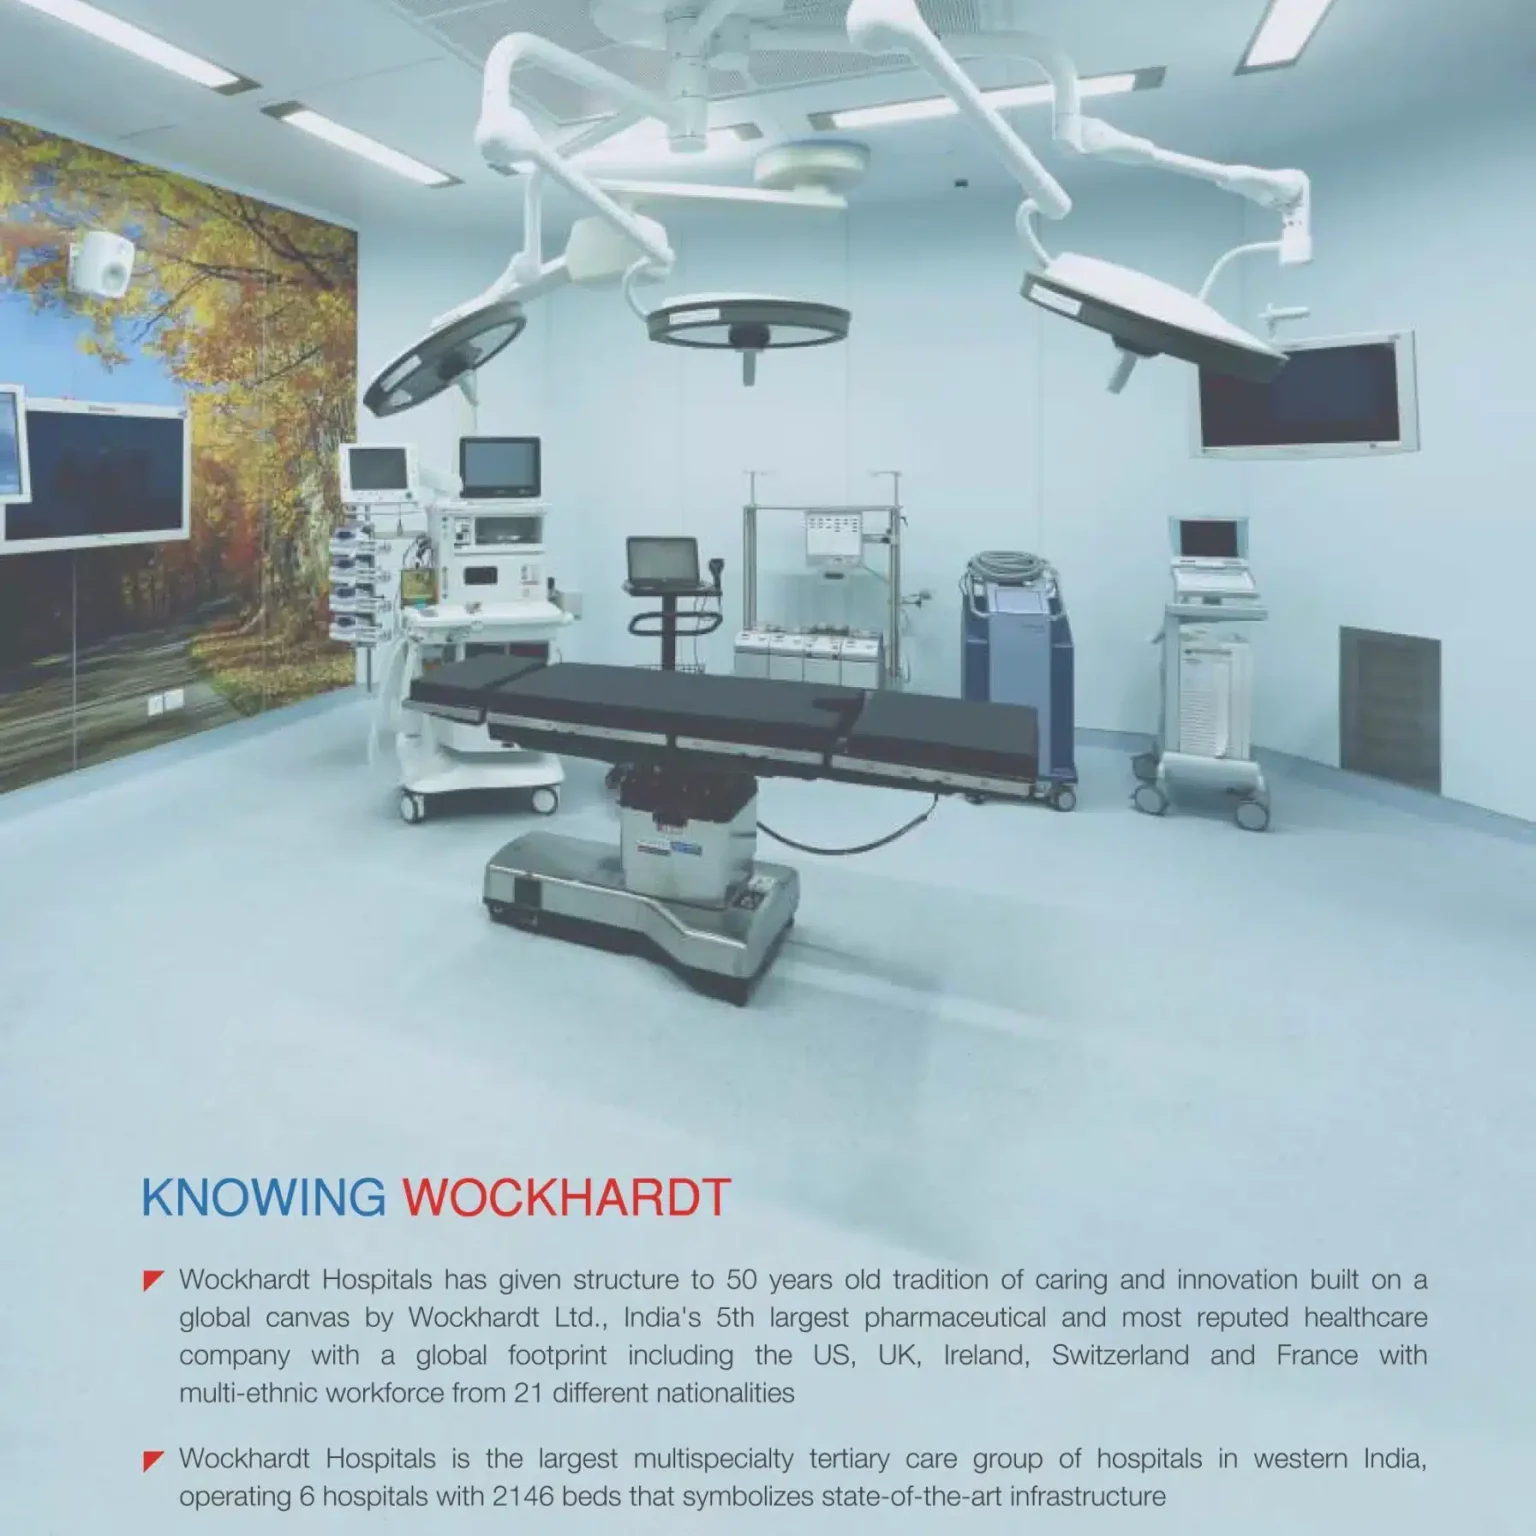 About Wockhardt Hospital